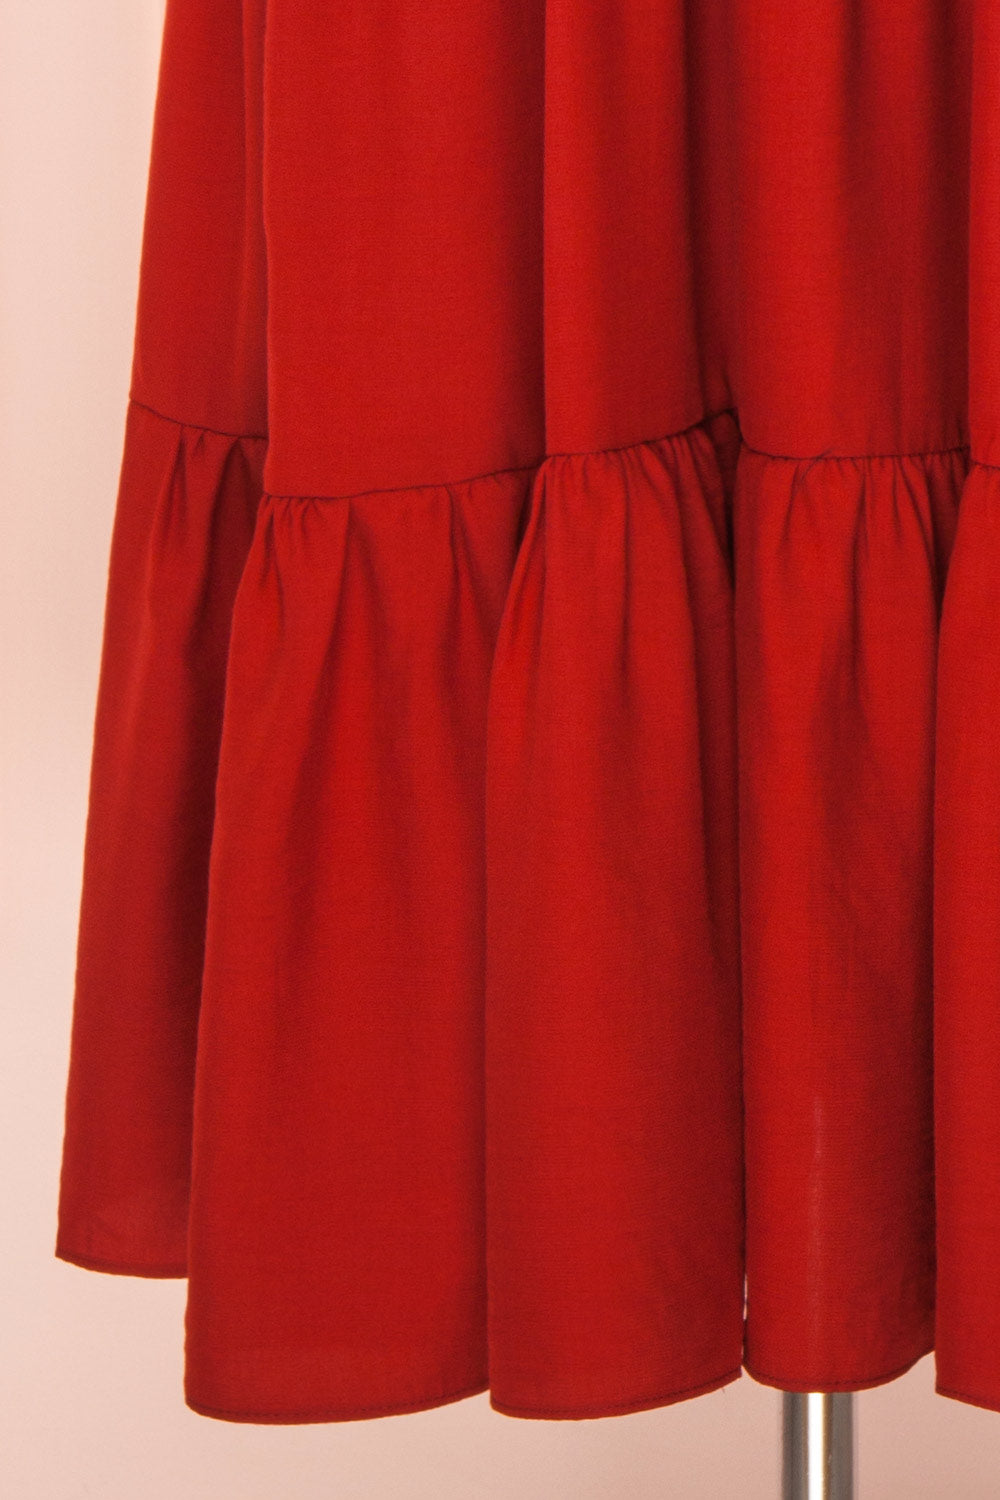 Catolie Red Layered Midi Dress w/ Frills | Boutique 1861 bottom 